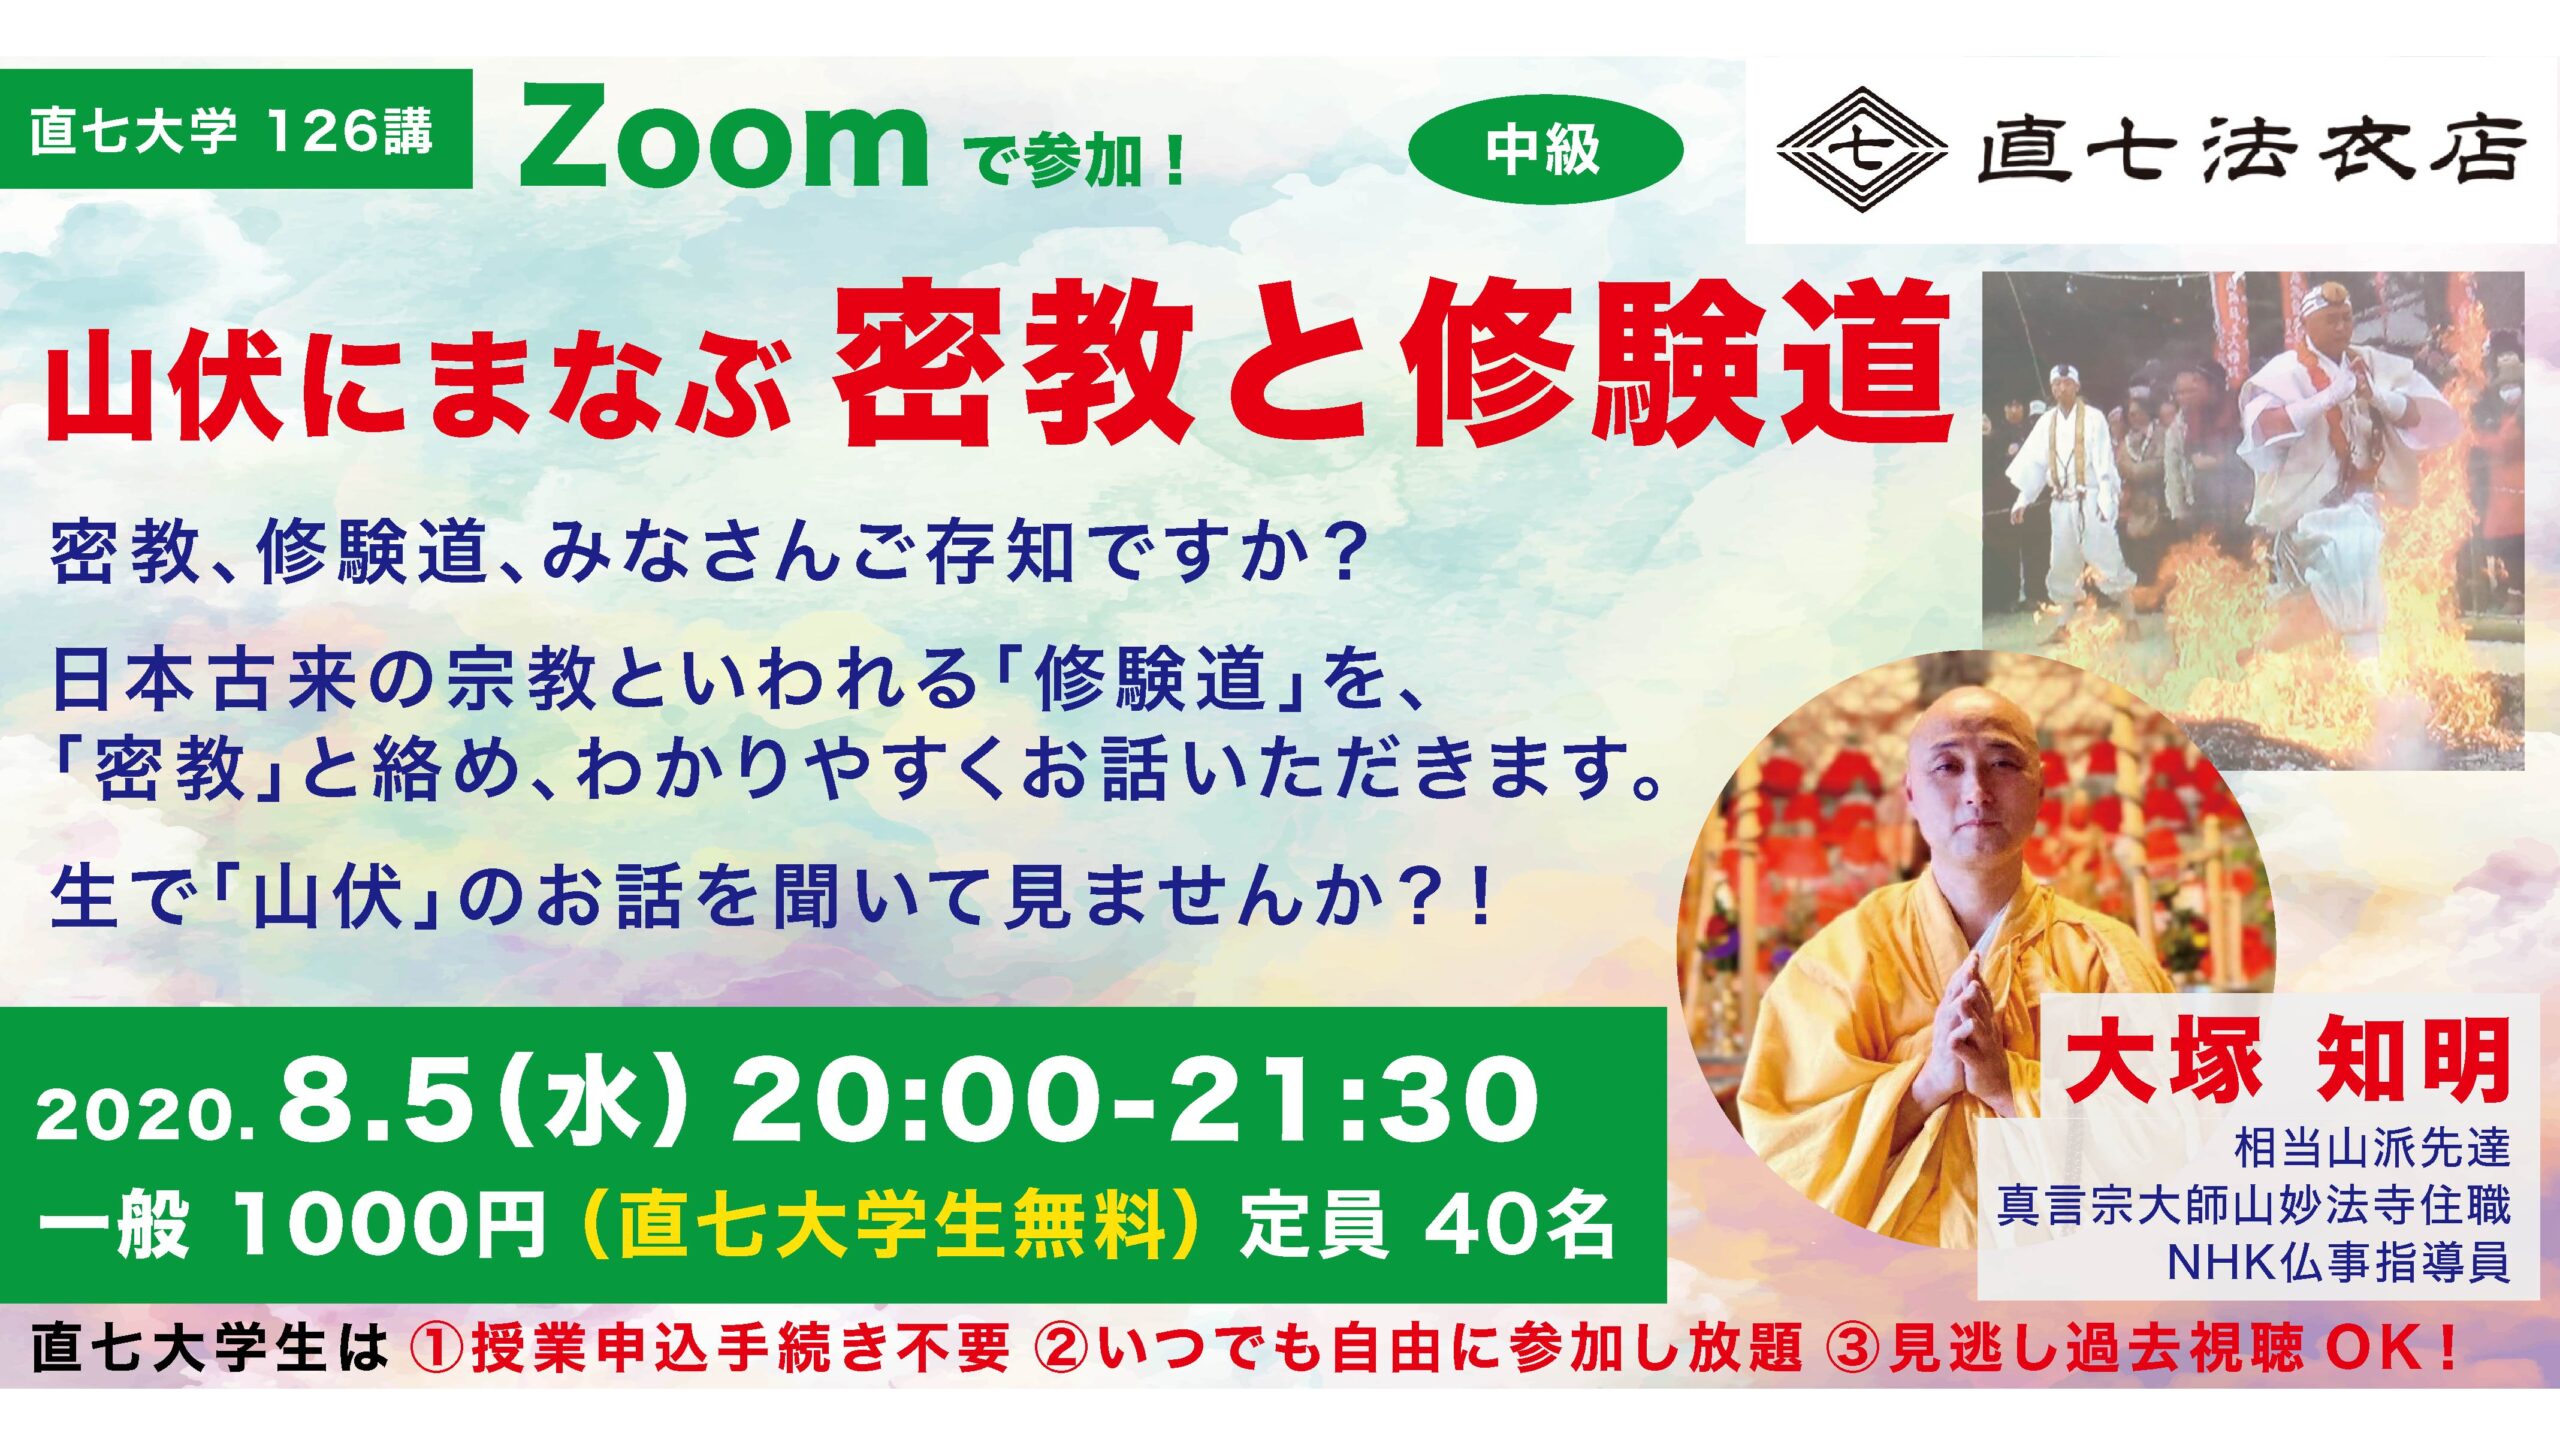 ZOOM座談会 オンライン 法衣店 密教と修験道